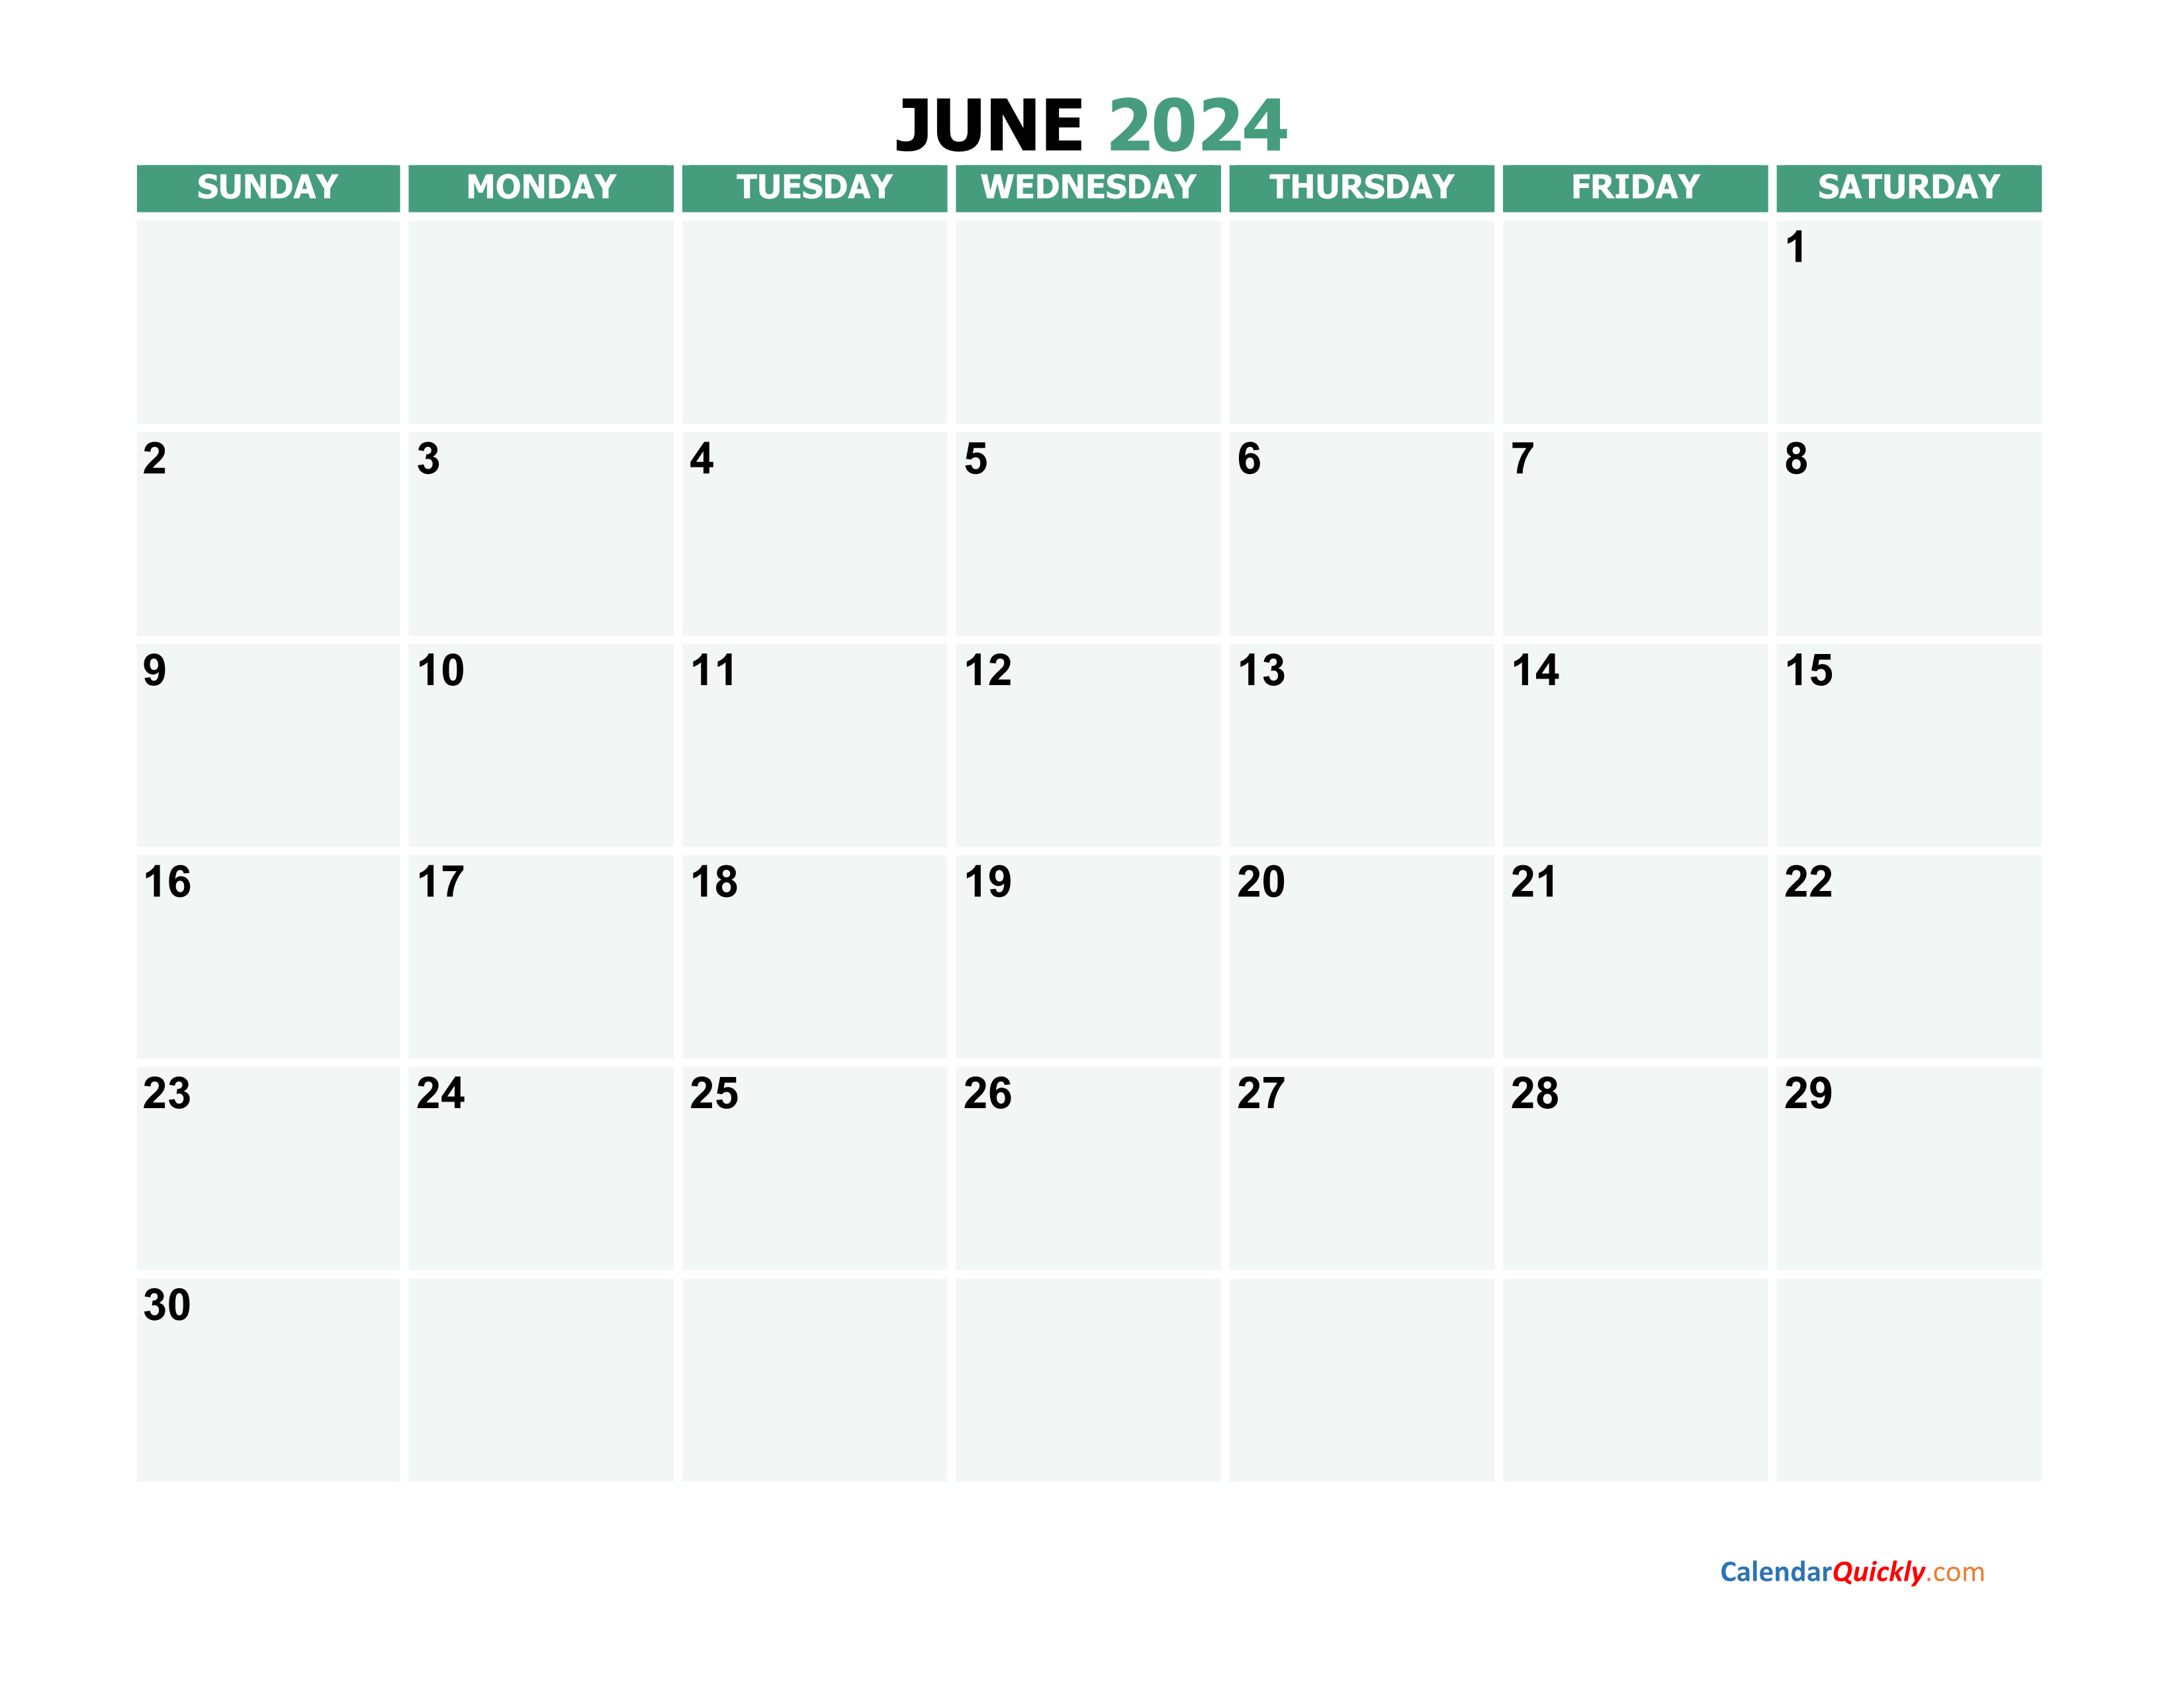 june-2024-printable-calendar-calendar-quickly